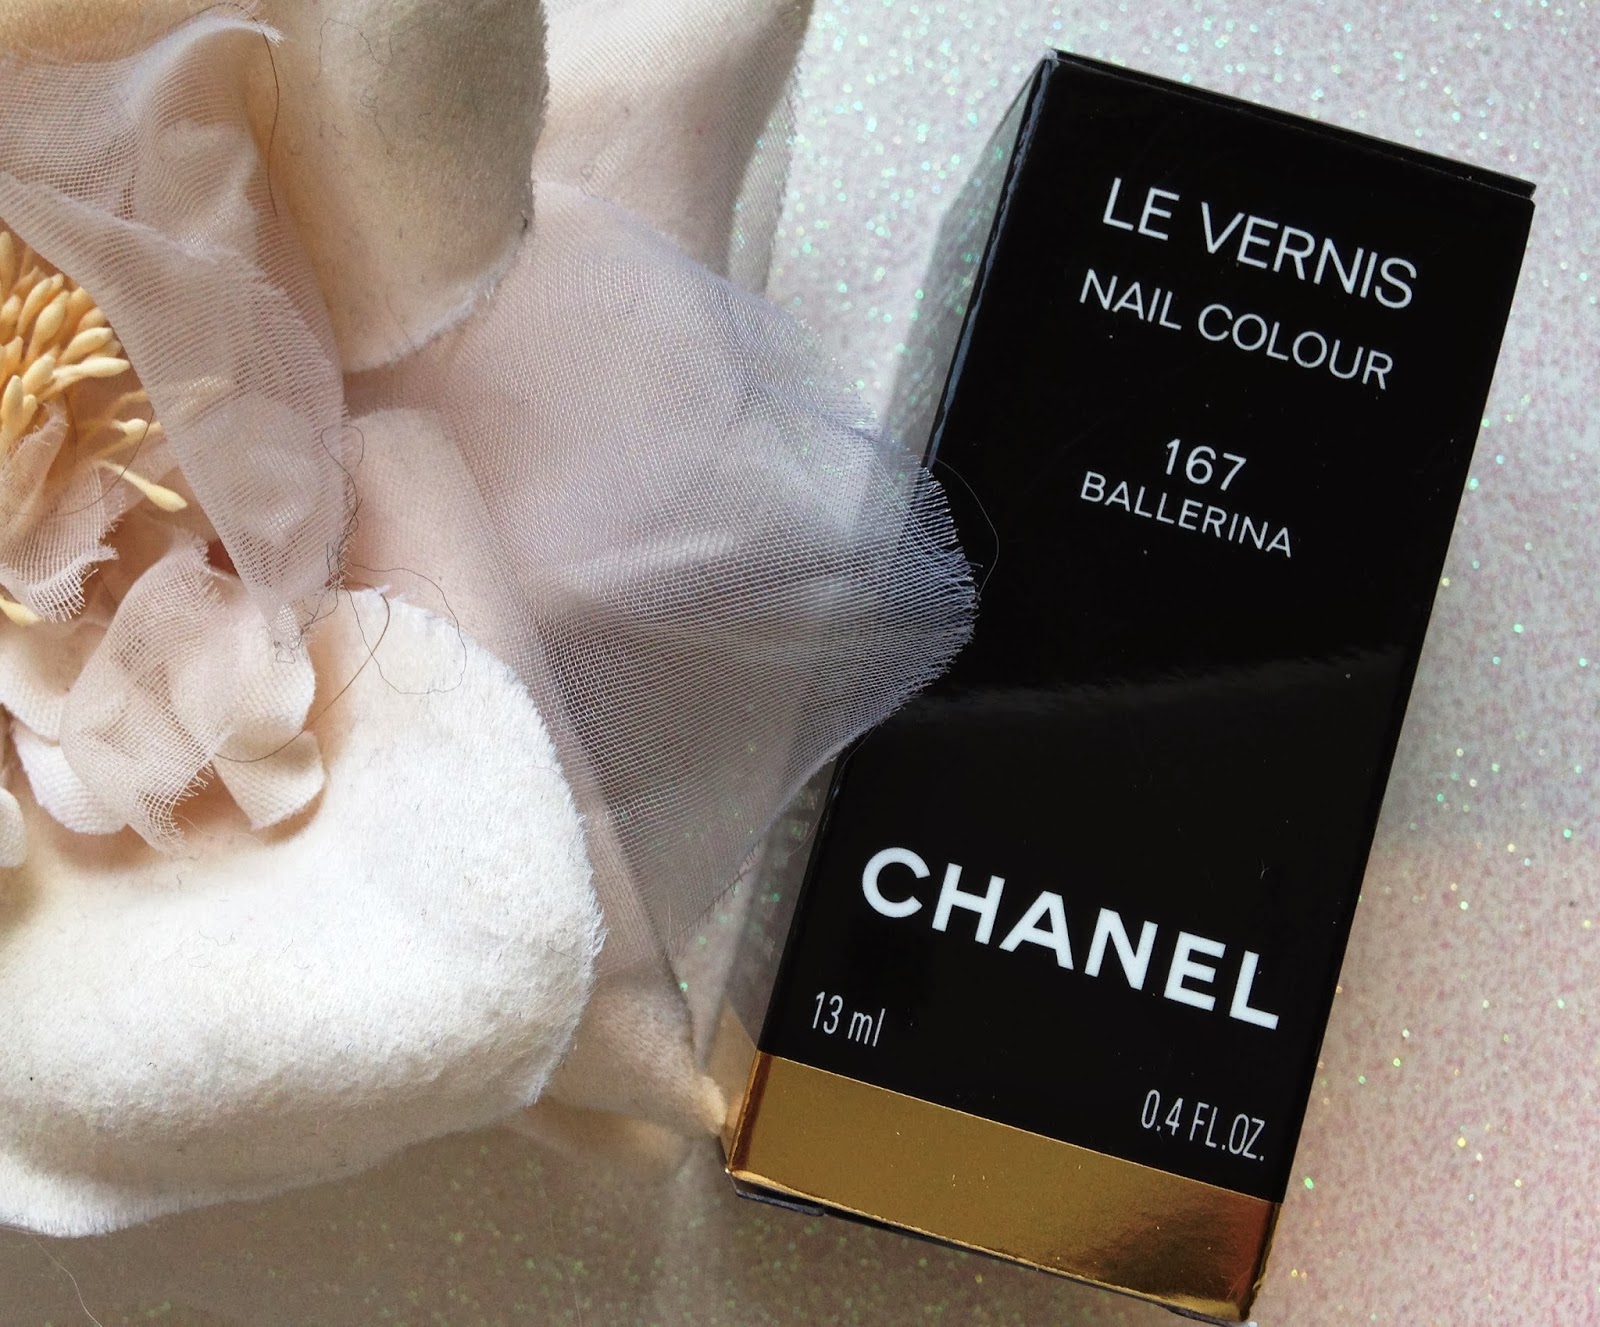 CHANEL Le Vernis Nail Colour, 101 Insomniaque at John Lewis & Partners